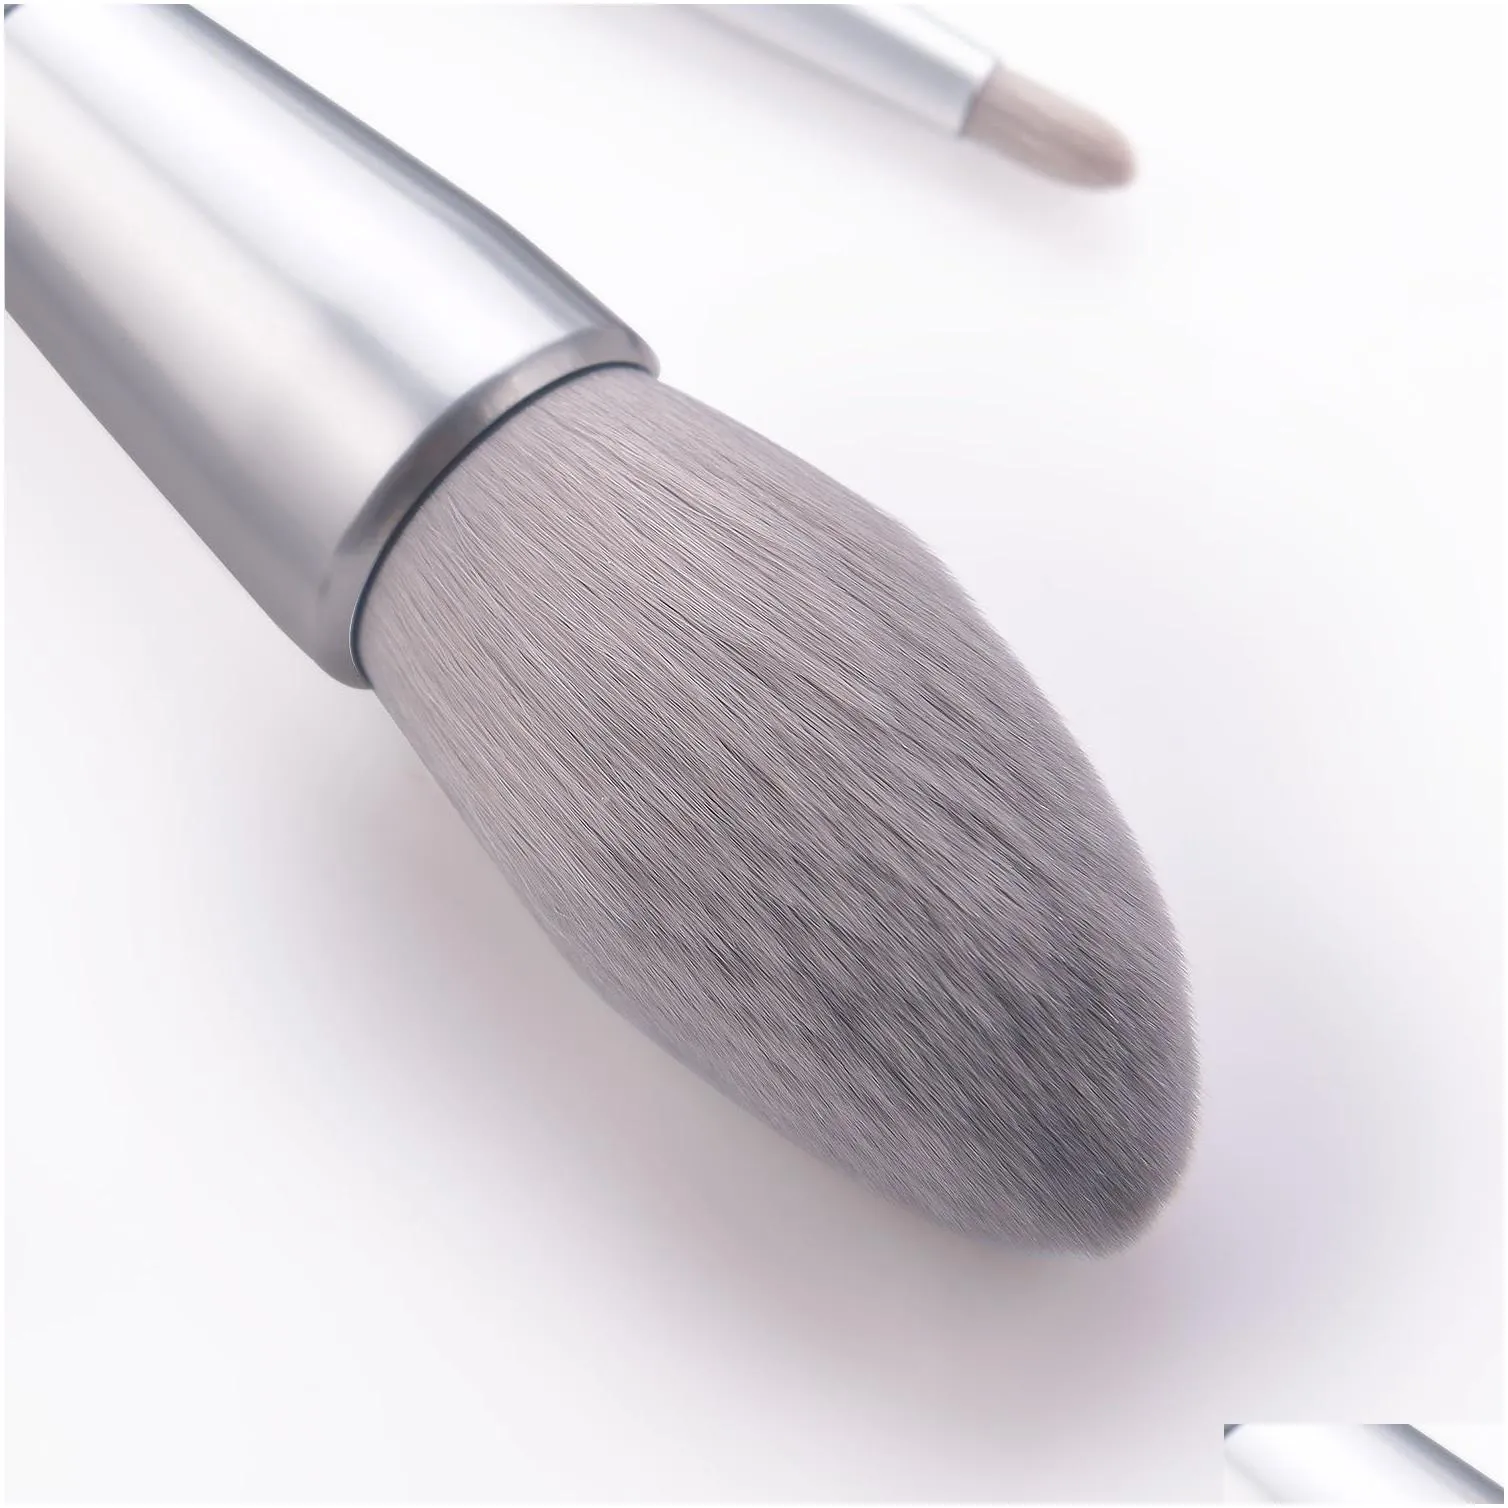 8pcs elegant silver handle makeup brush set gray hair foundation eyeshadow cosmetic Make Up brush set kit flame brush Beauty